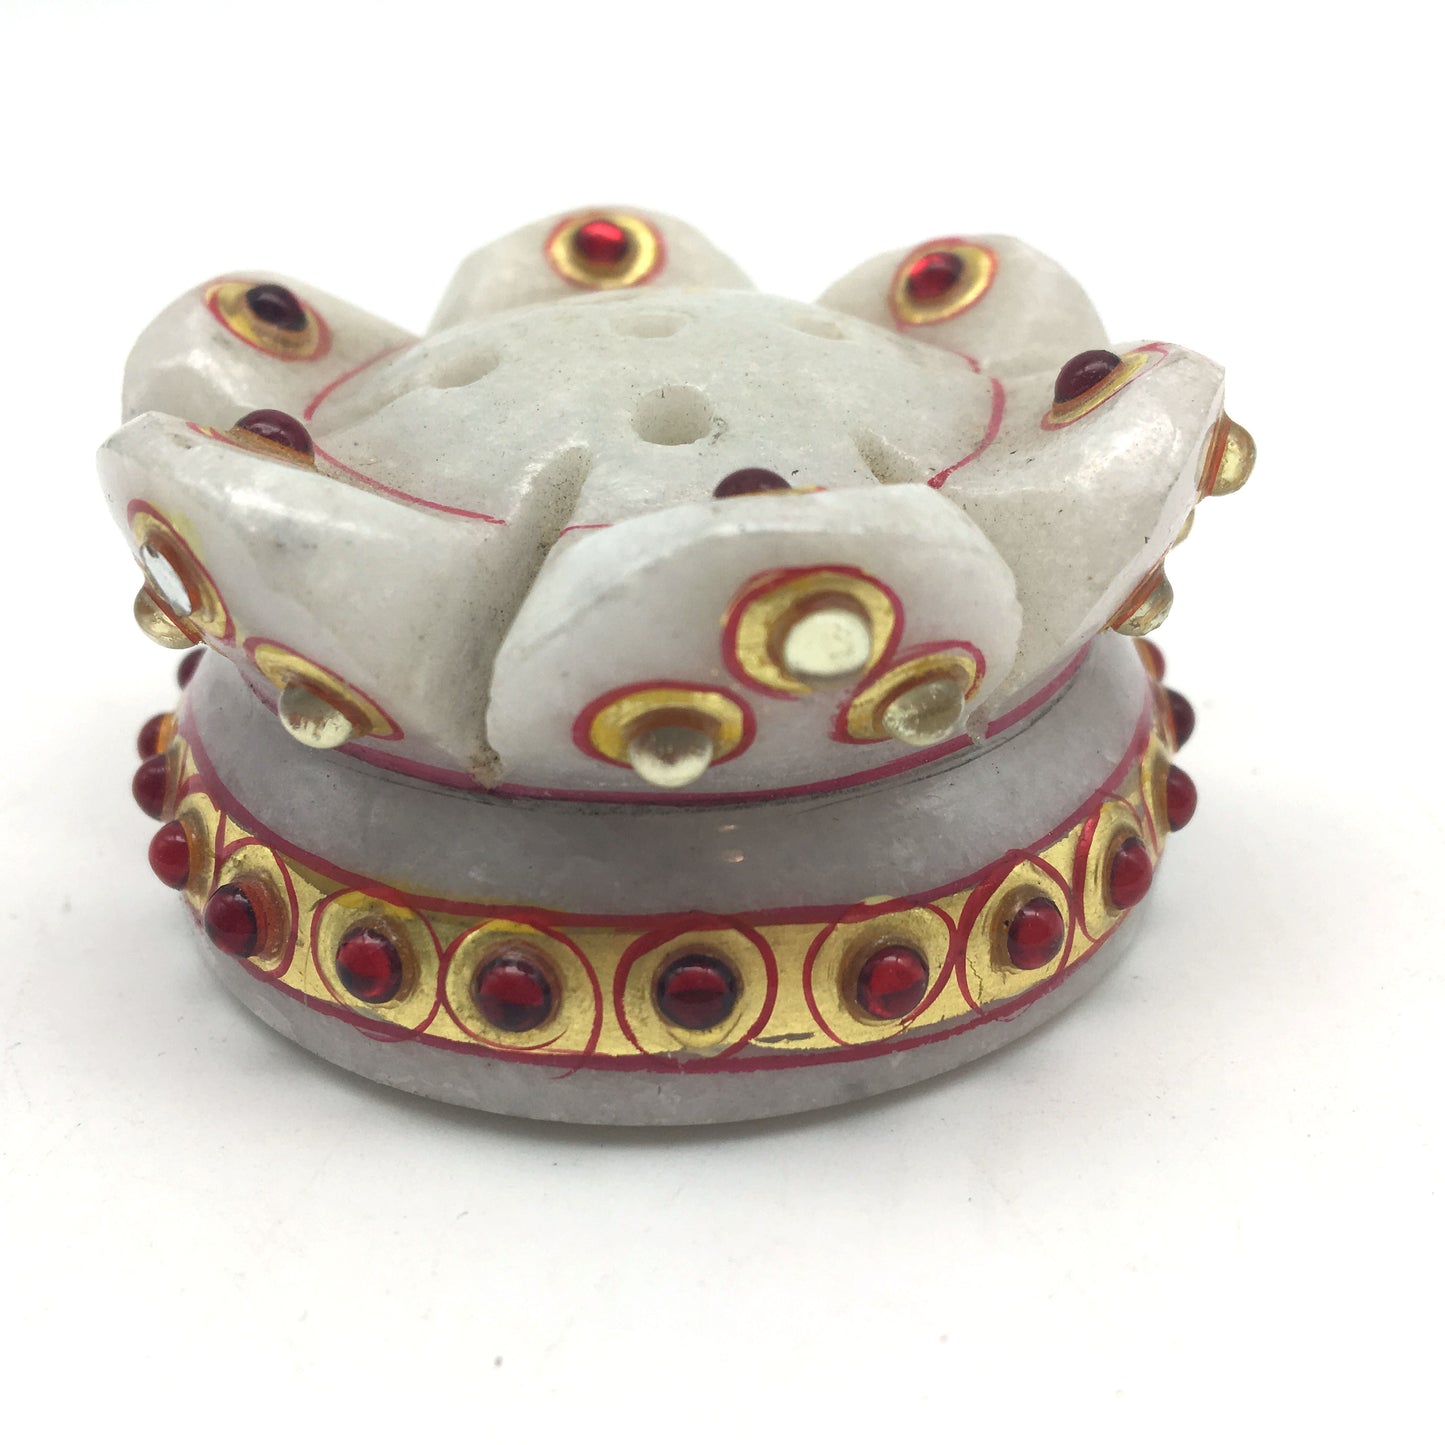 Handcrafted Marble Flower Shaped Decorative Incense Burner Holder for Stick Ince - Montecinos Ethnic